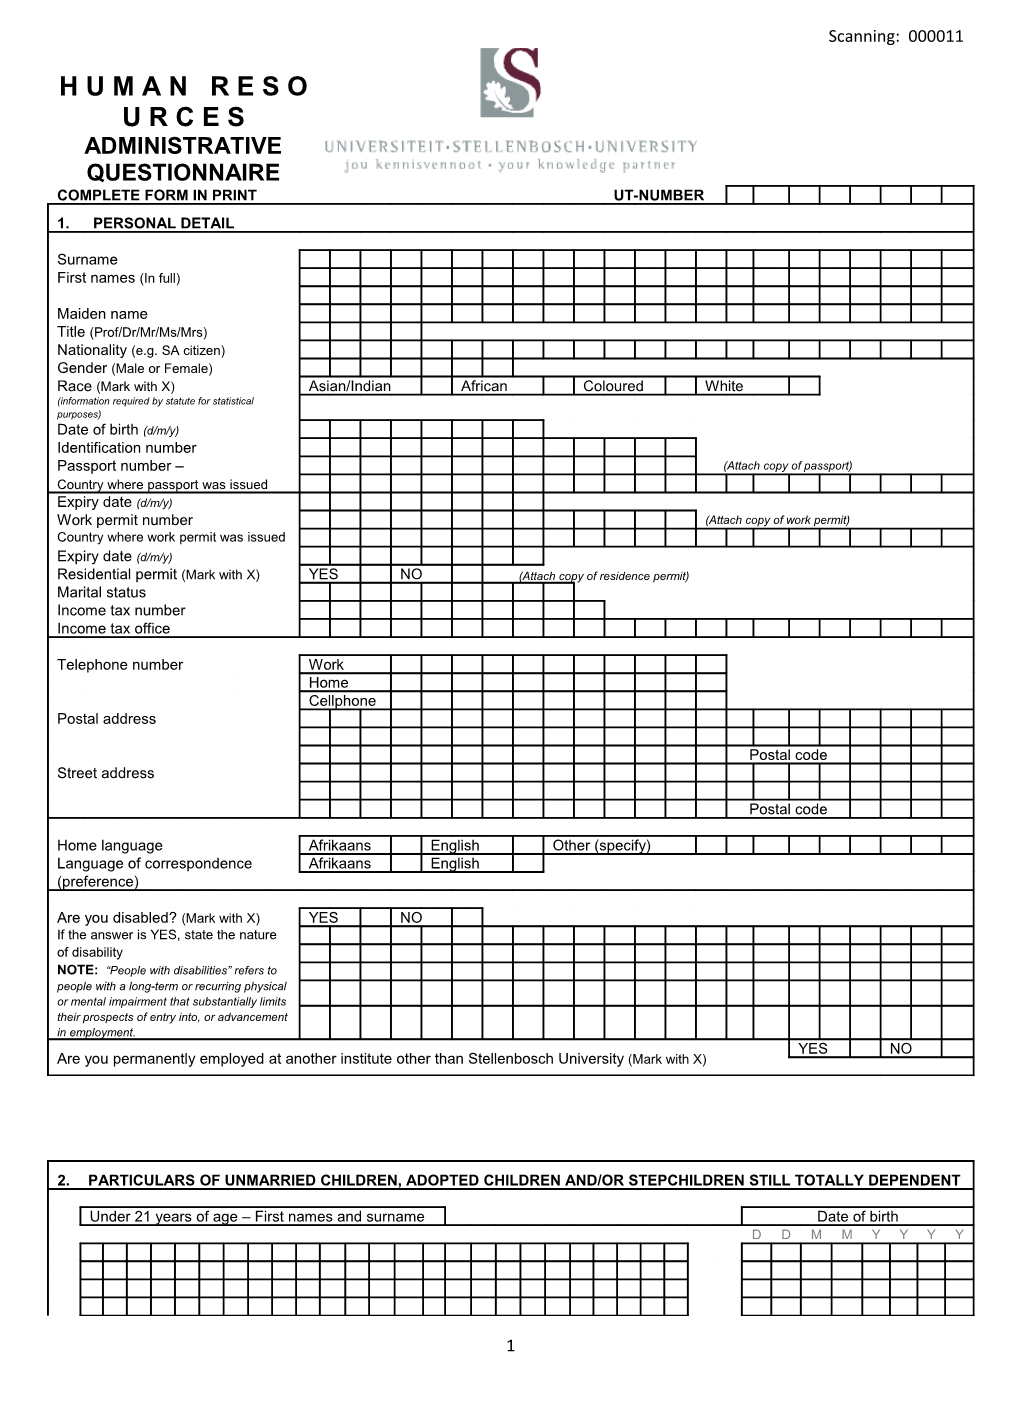 HR Administrative Questionnaire